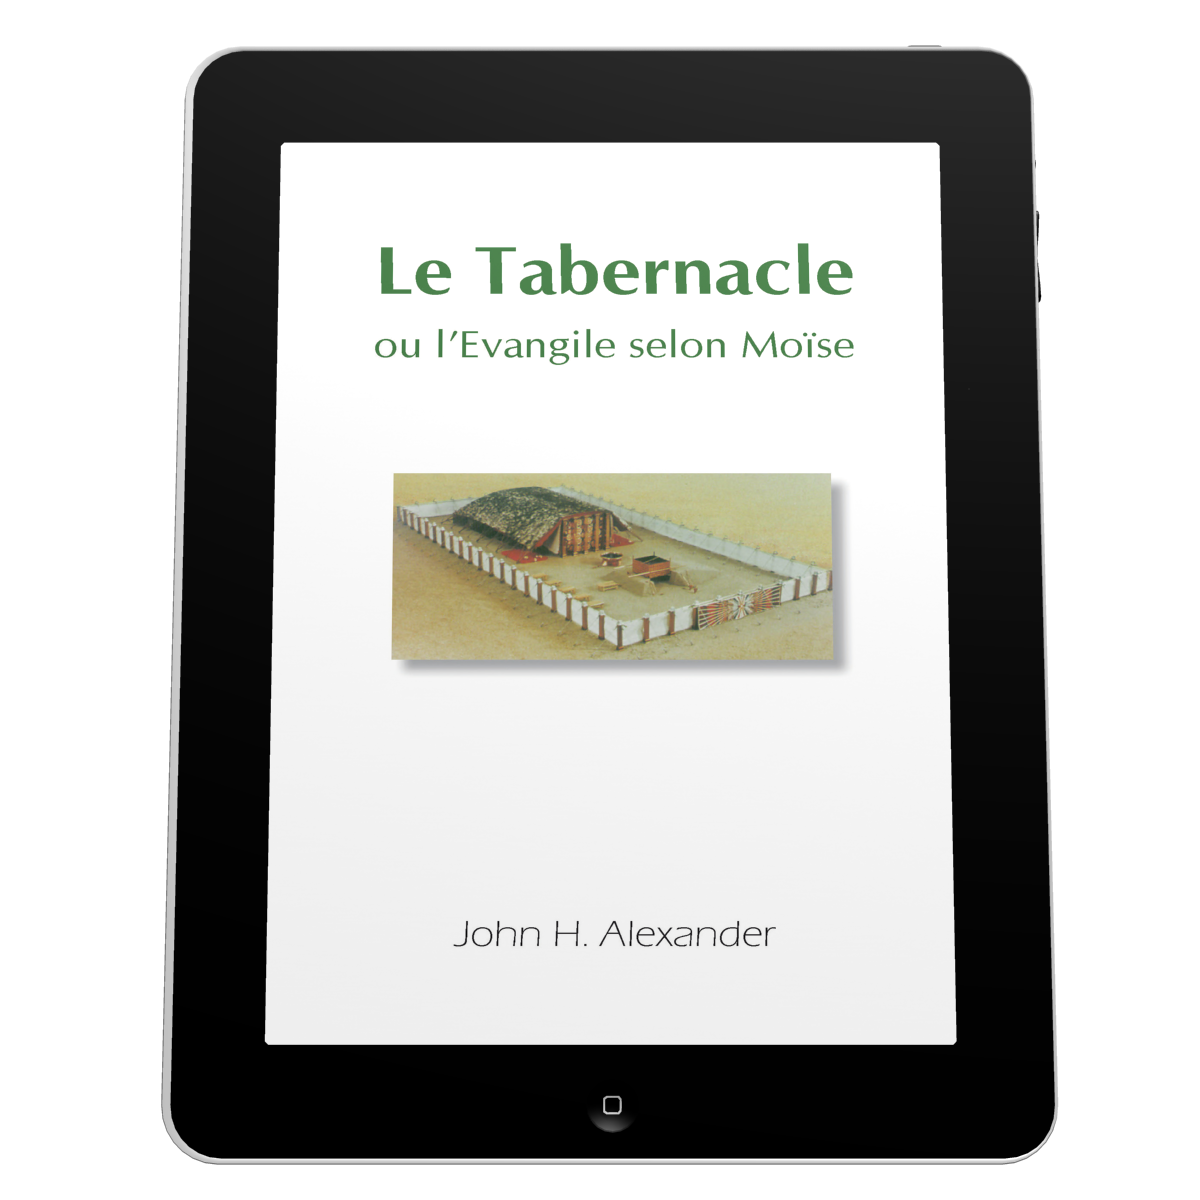 Tabernacle, ou l'Evangile selon Moïse (Le) - ou l'Evangile selon Moïse - Ebook